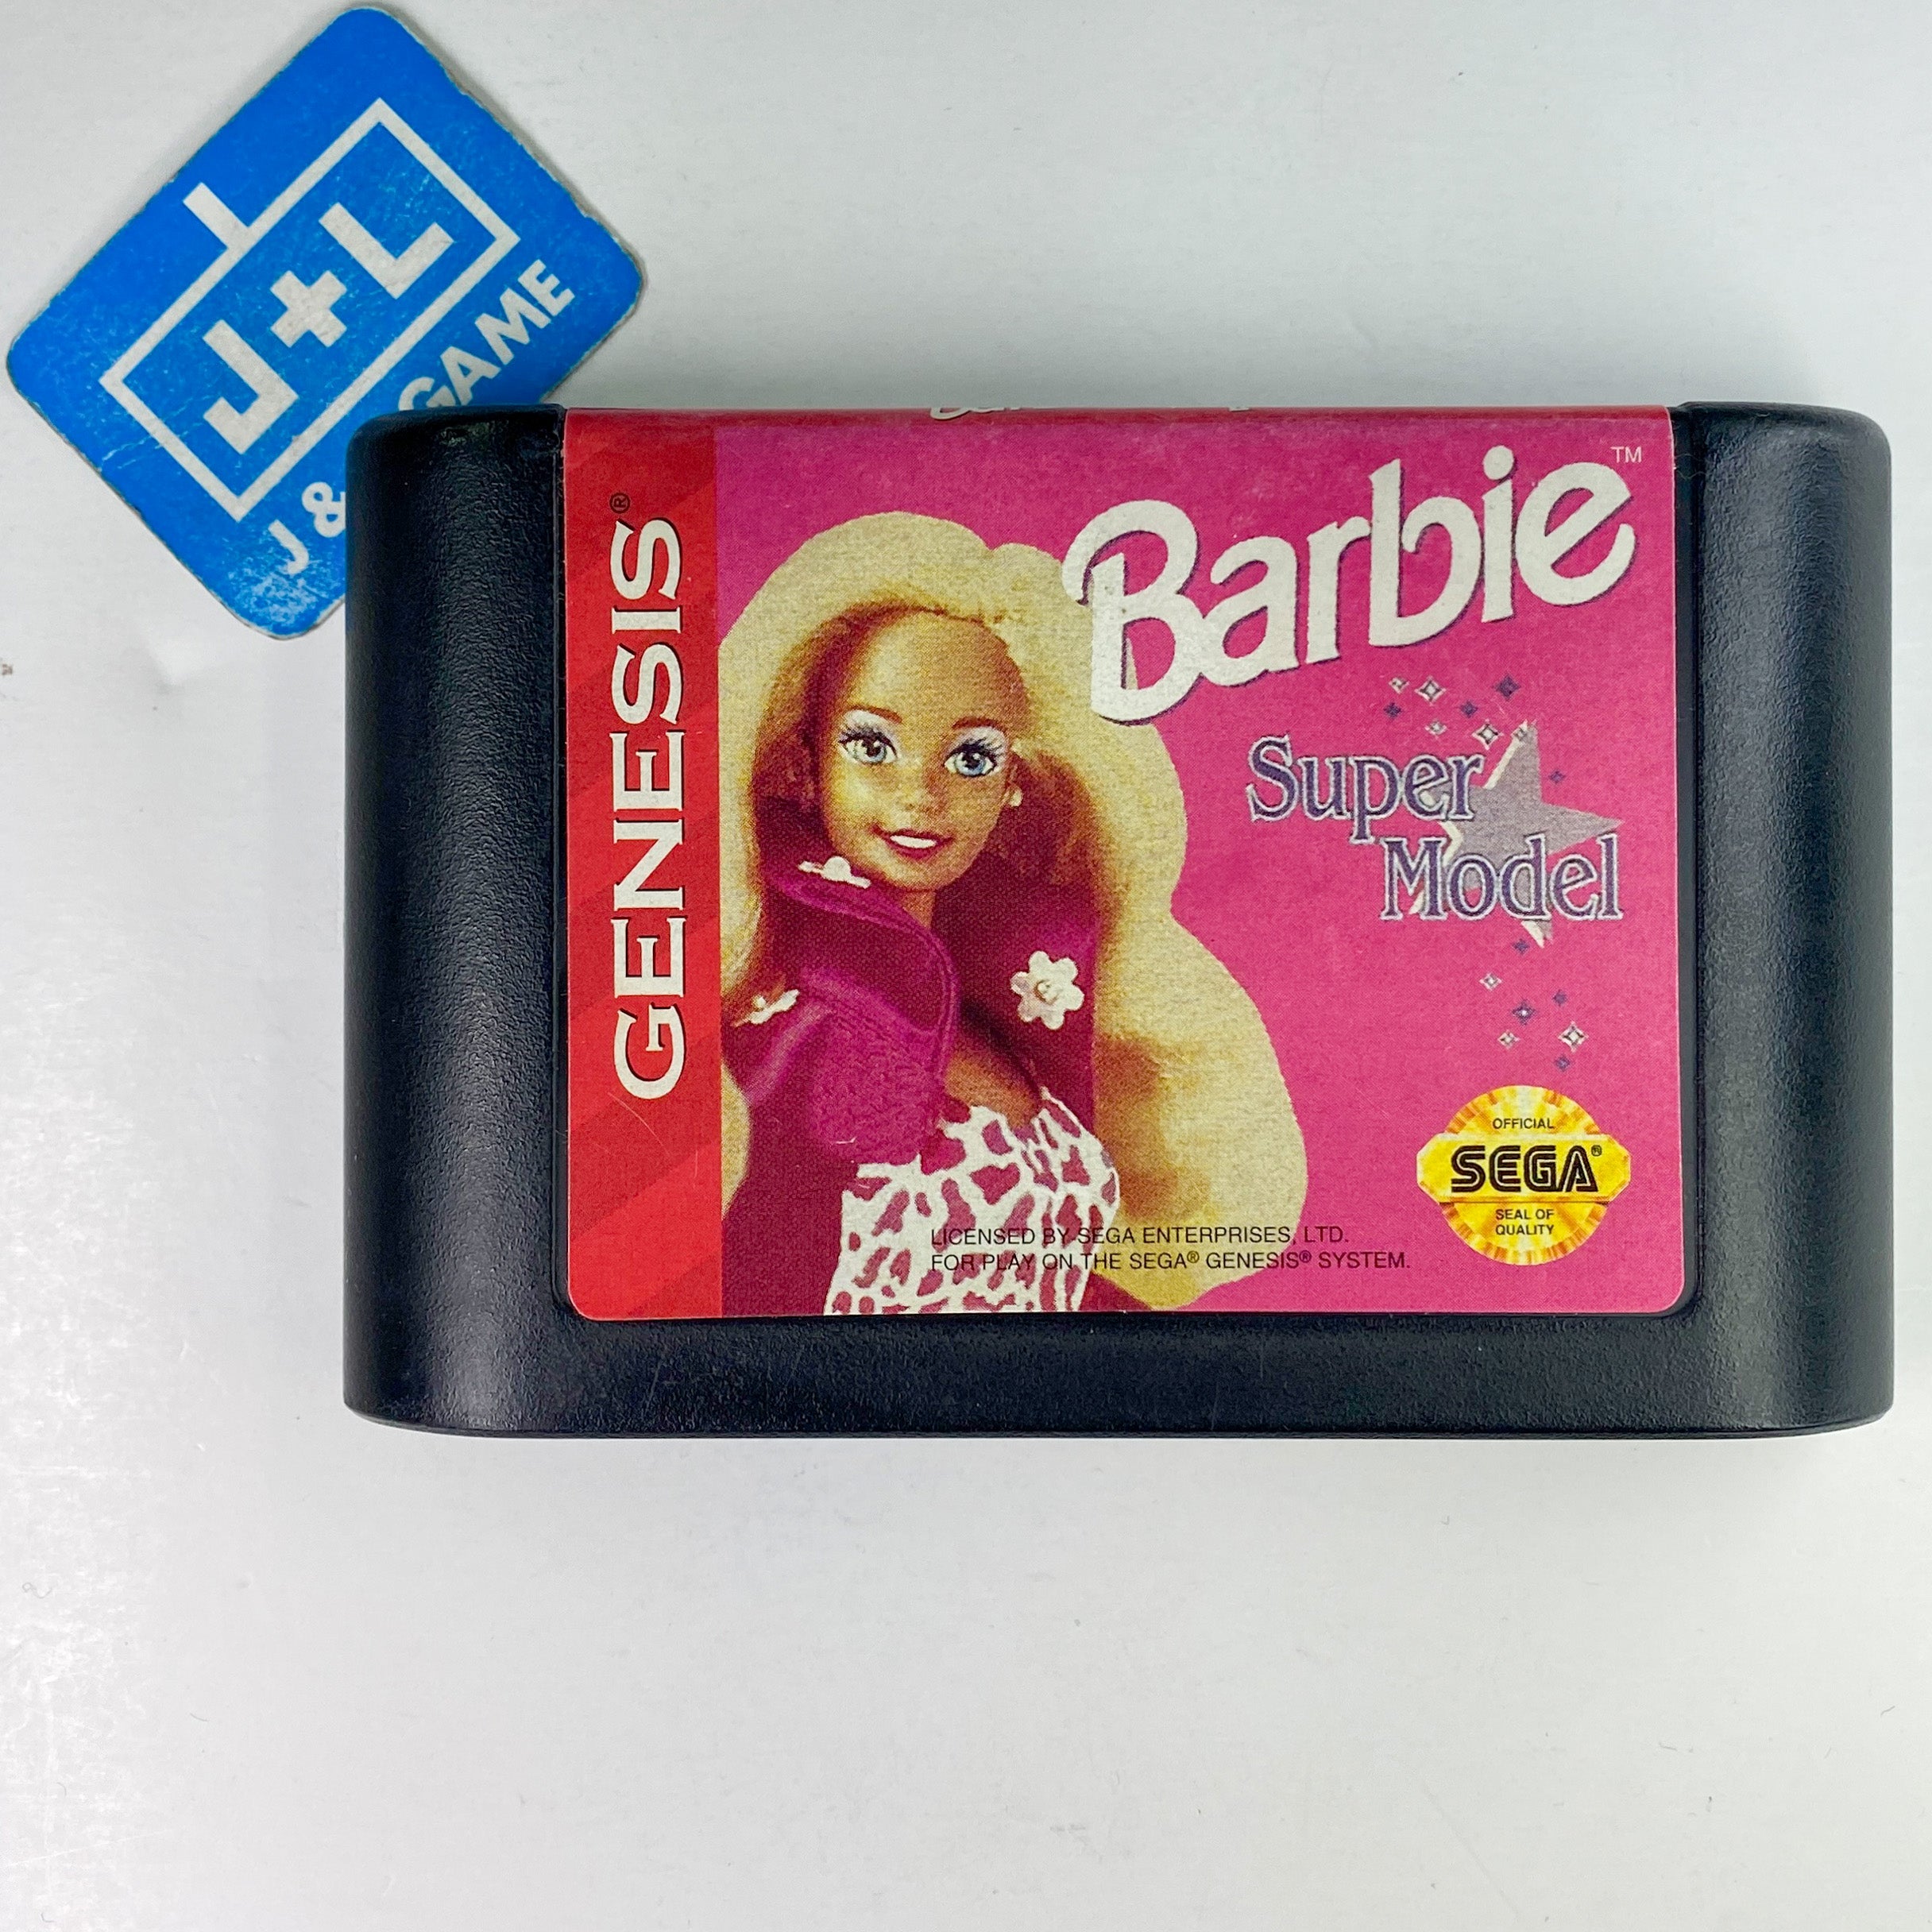 Barbie Super Model - (SG) SEGA Genesis [Pre-Owned] Video Games Hi Tech Expressions   